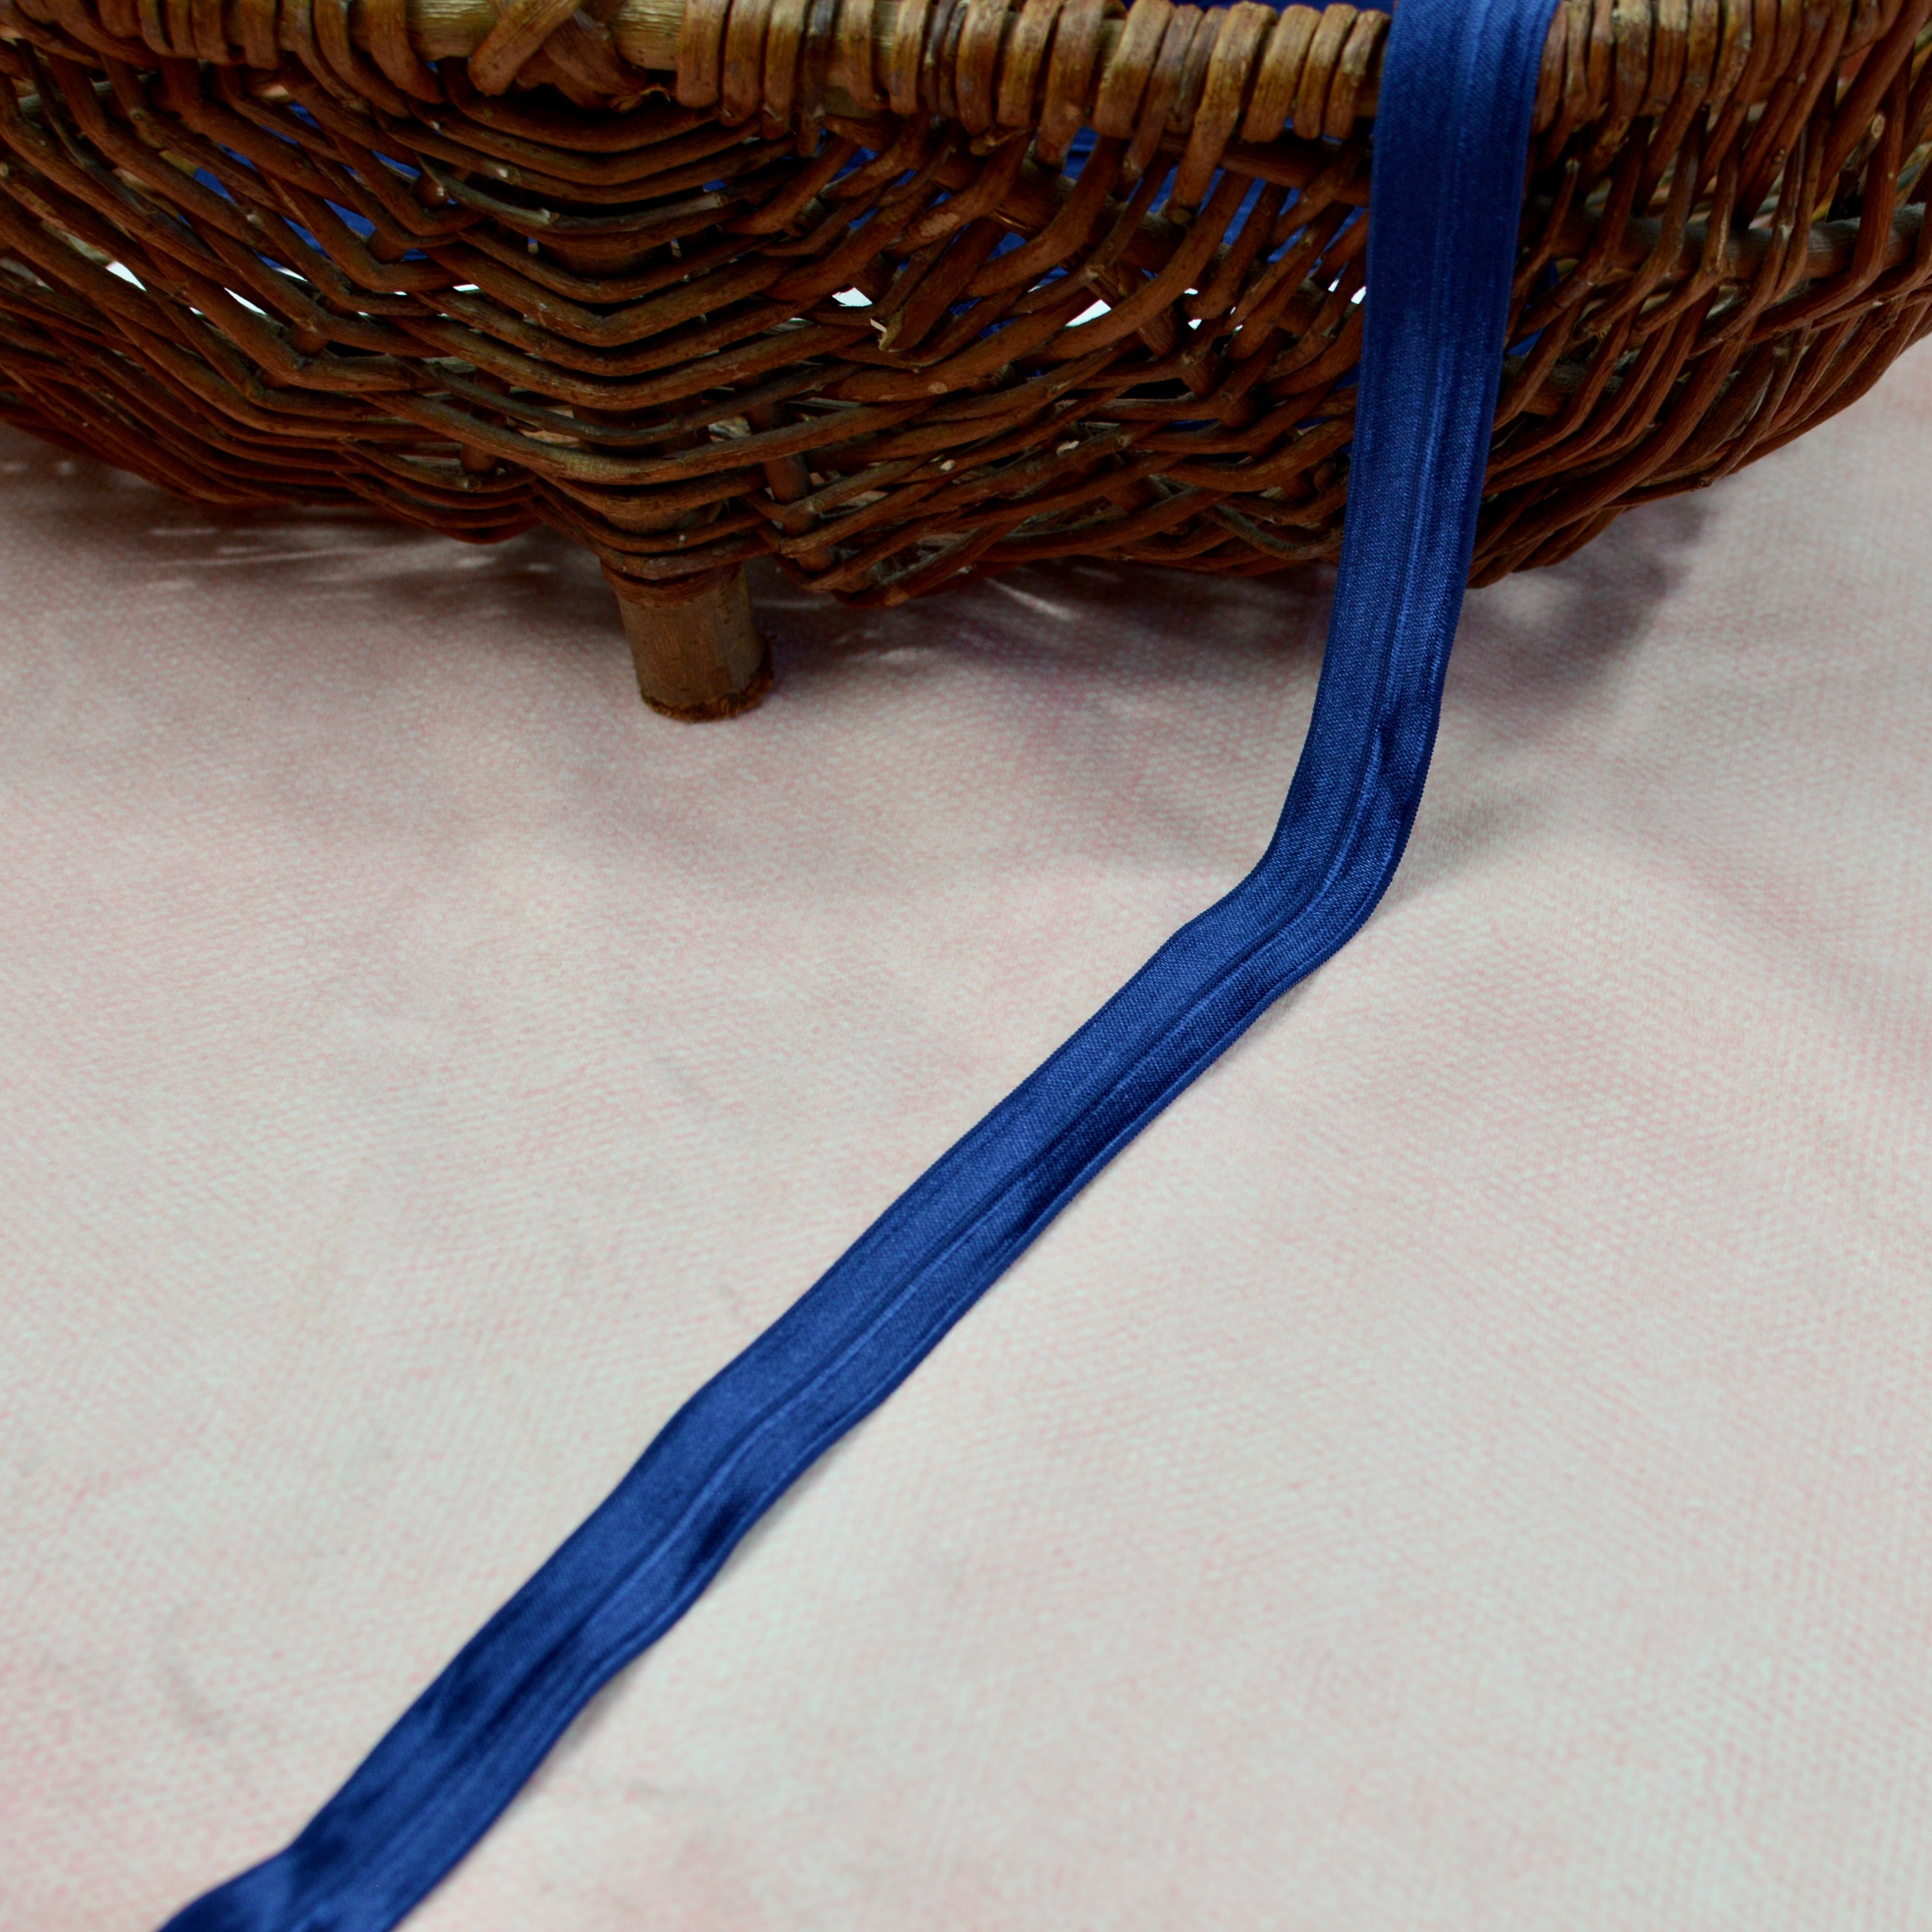 Faltgummi / Falzgummi / elastisches Einfassband 20m dunkelblau Fabric poshpinks